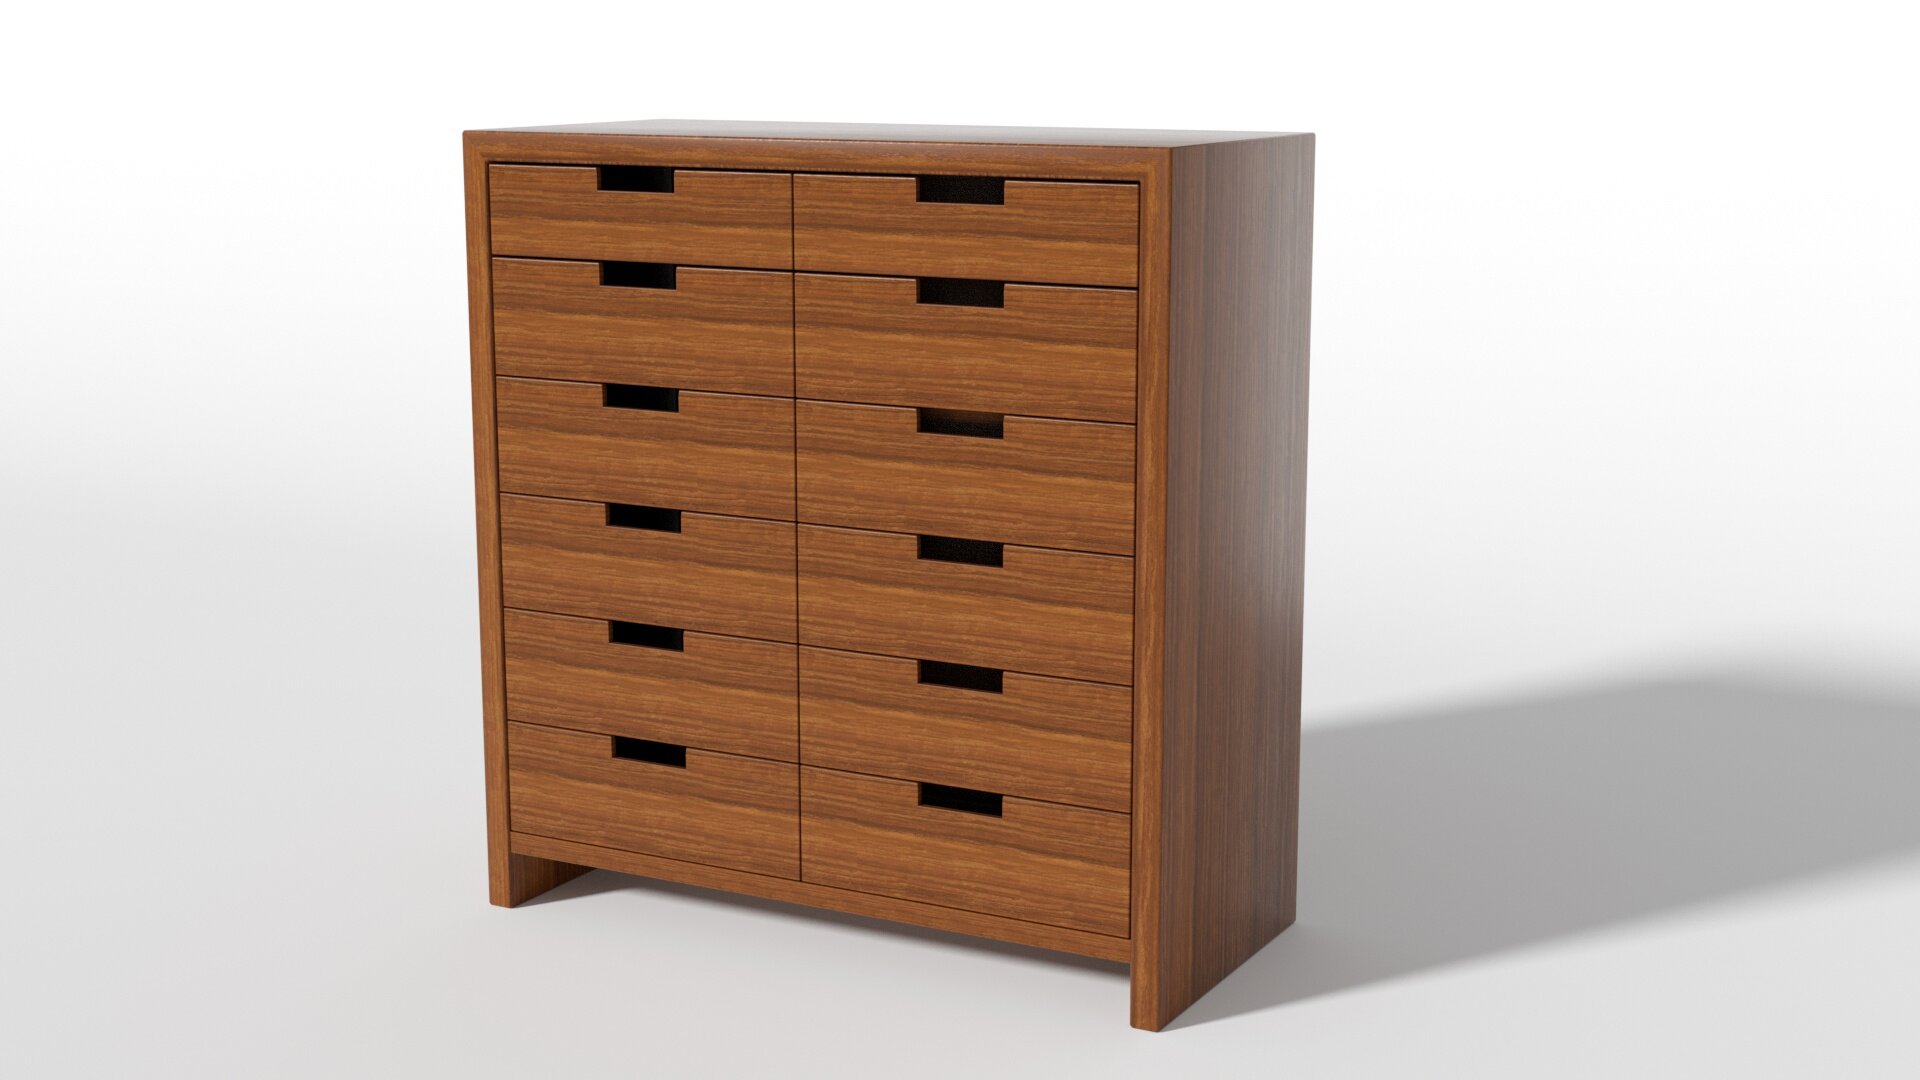 EK_Reedy_Furniture_Double_Drawer_Burear_No_Hardware_Solid_Walnut_Luxury_Modern_Handmade_Furniture.jpg